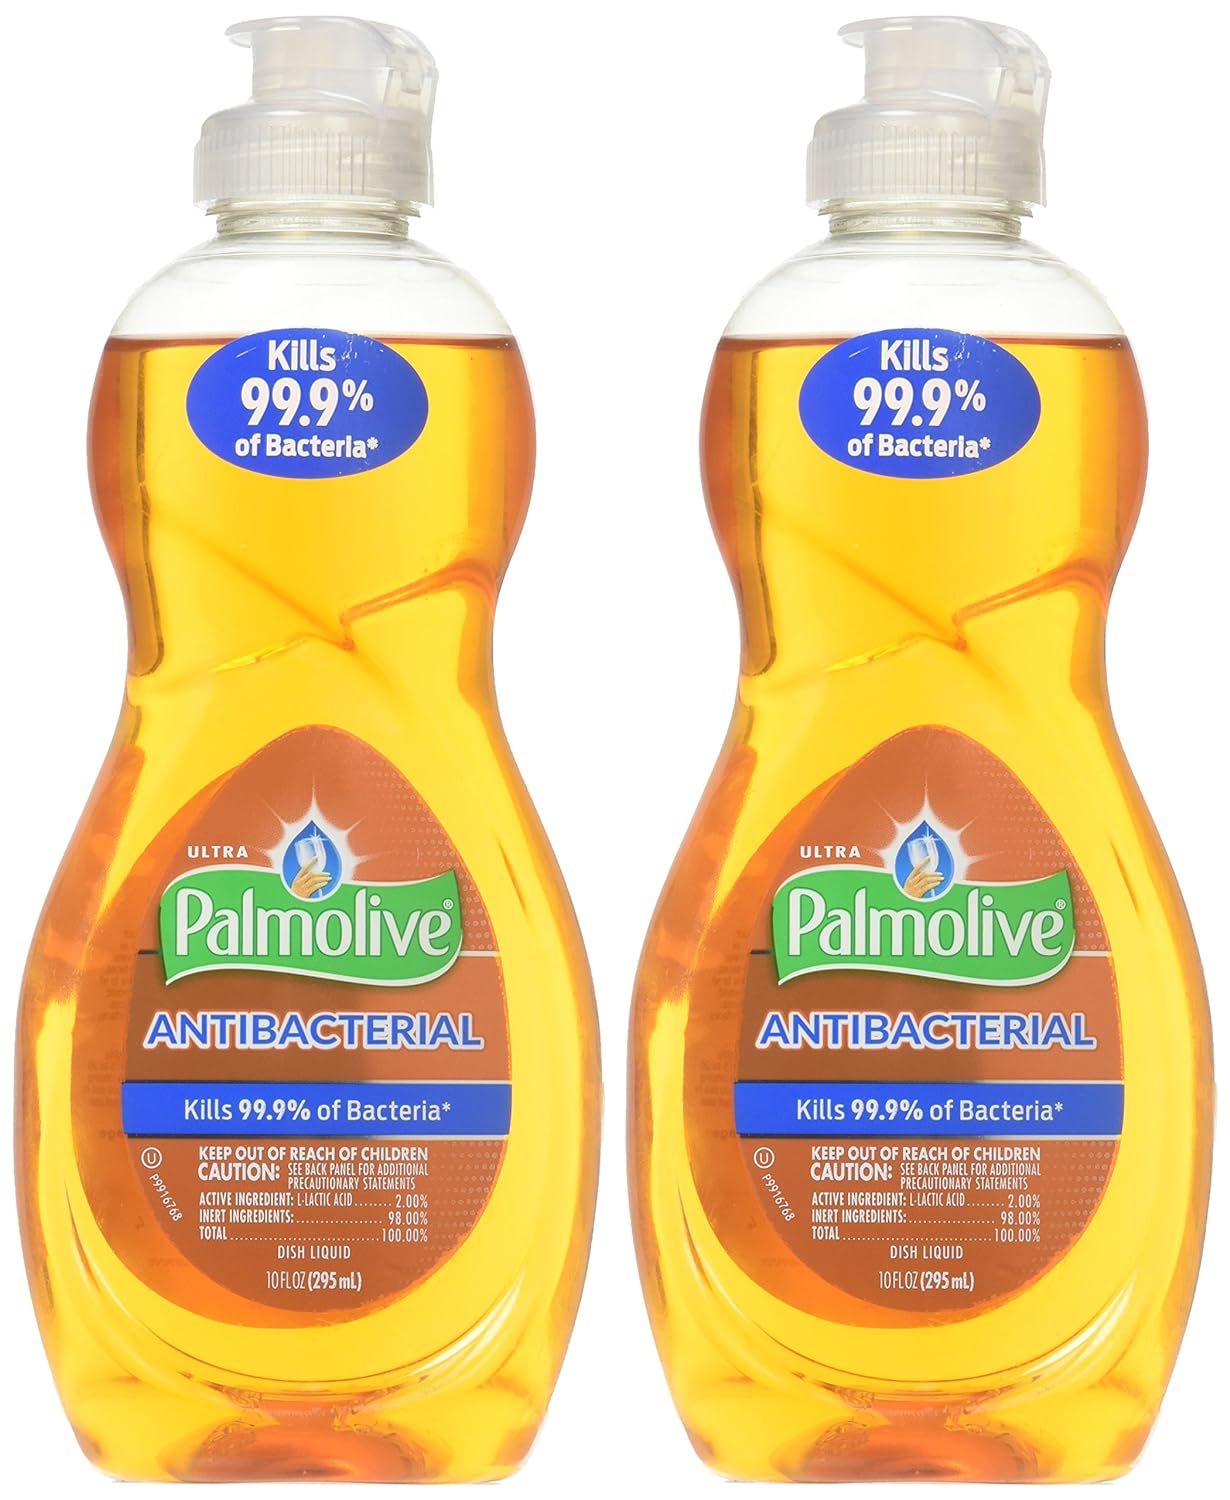 Palmolive Ultra Antibacterial Orange Dish Washing Liquid, 10 oz-2 pack : Health & Household